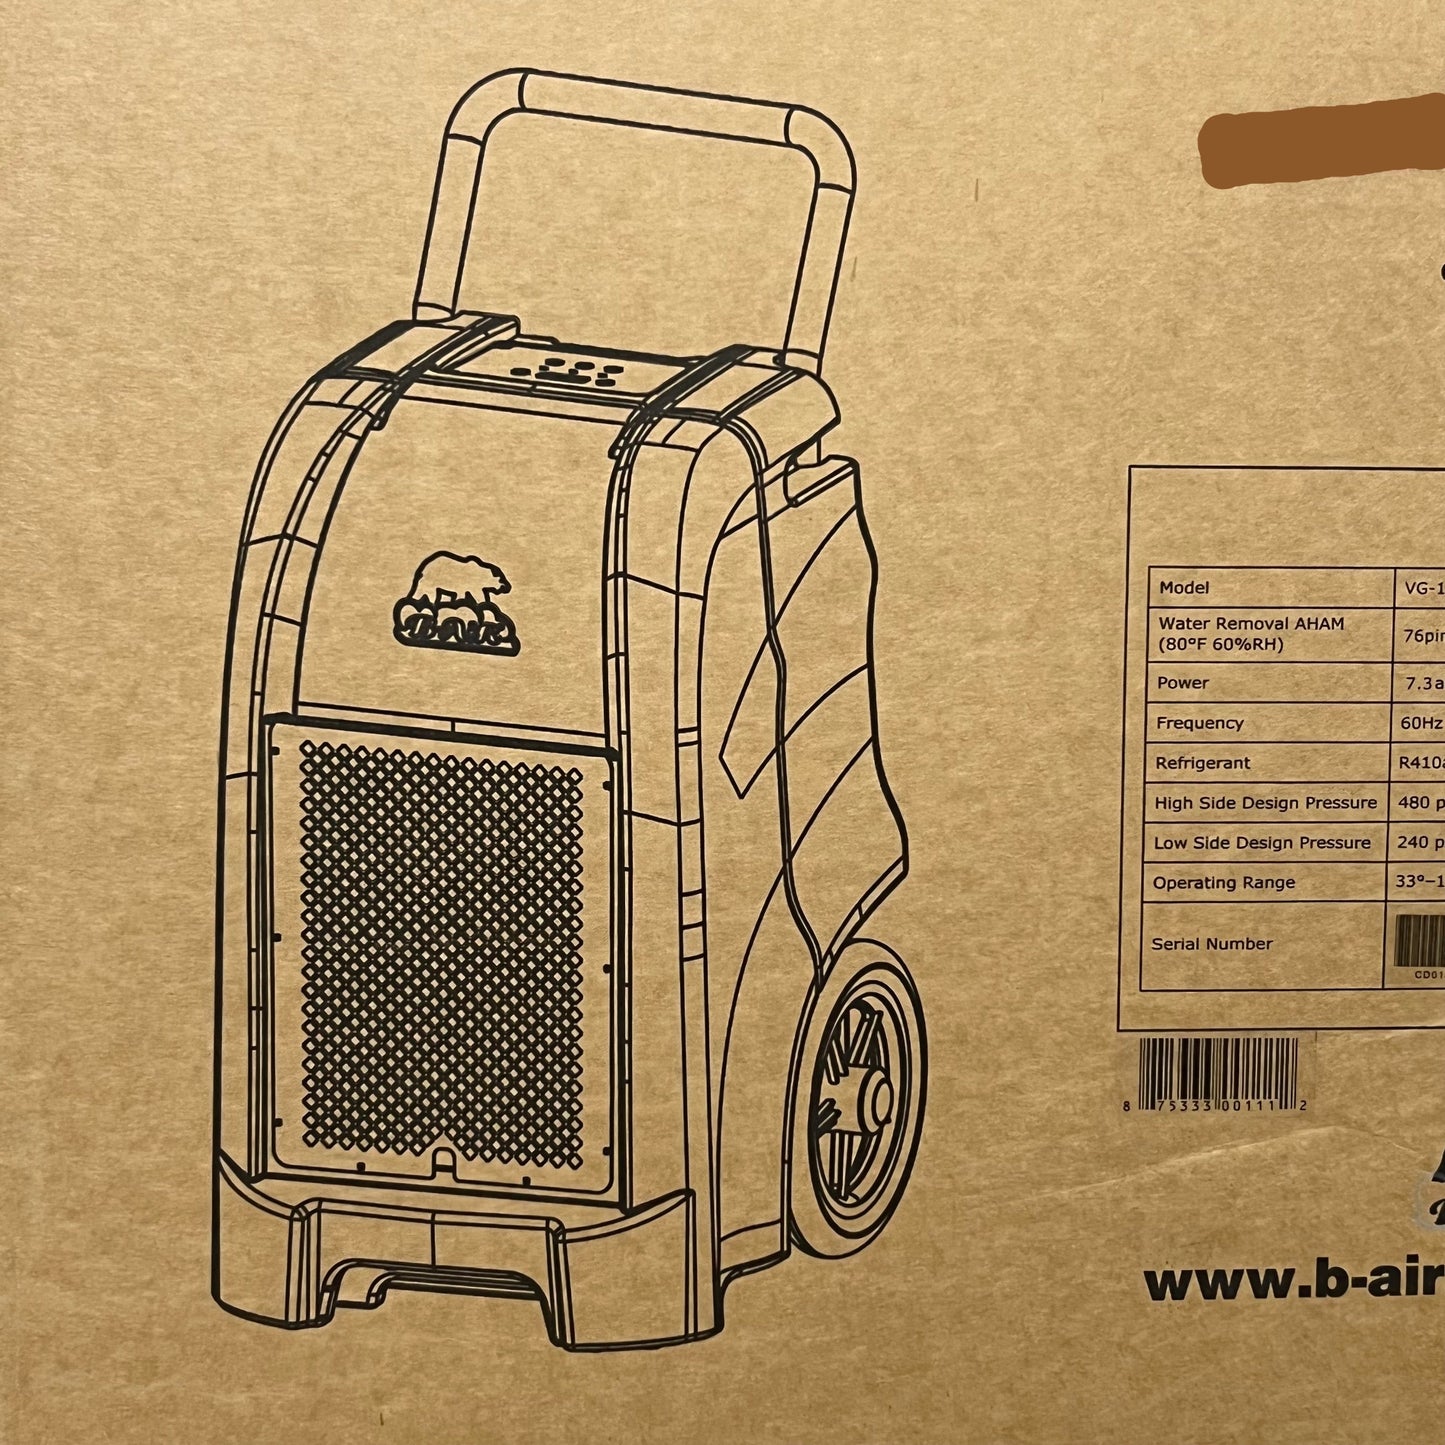 ZA@ B-AIR Vantage 1500 Moisture Removing Portable Refrigerant Dehumidifier VG-150 A